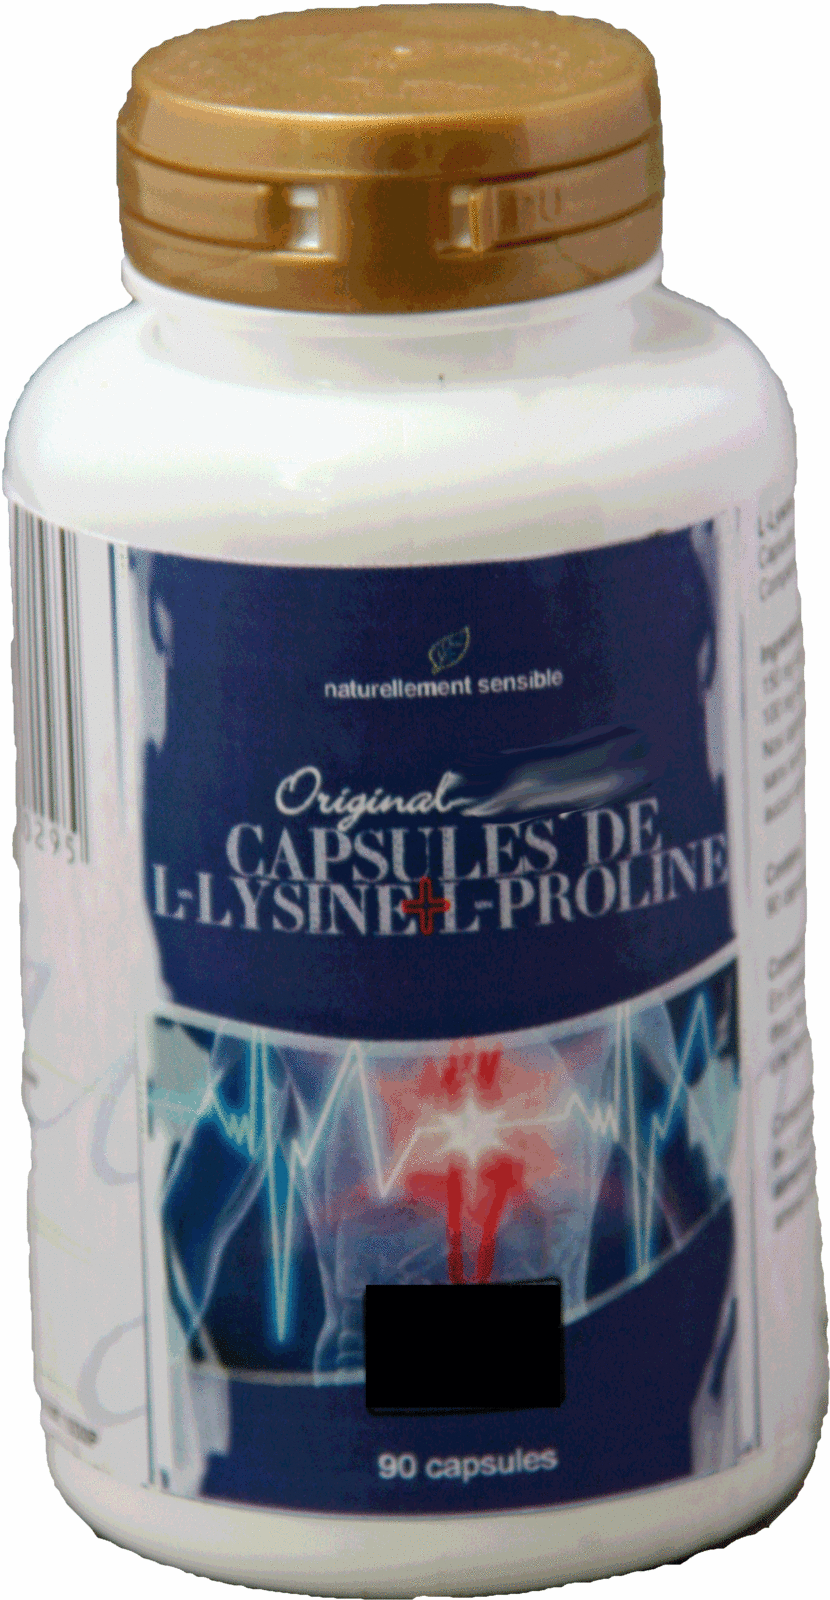 lysine+proline